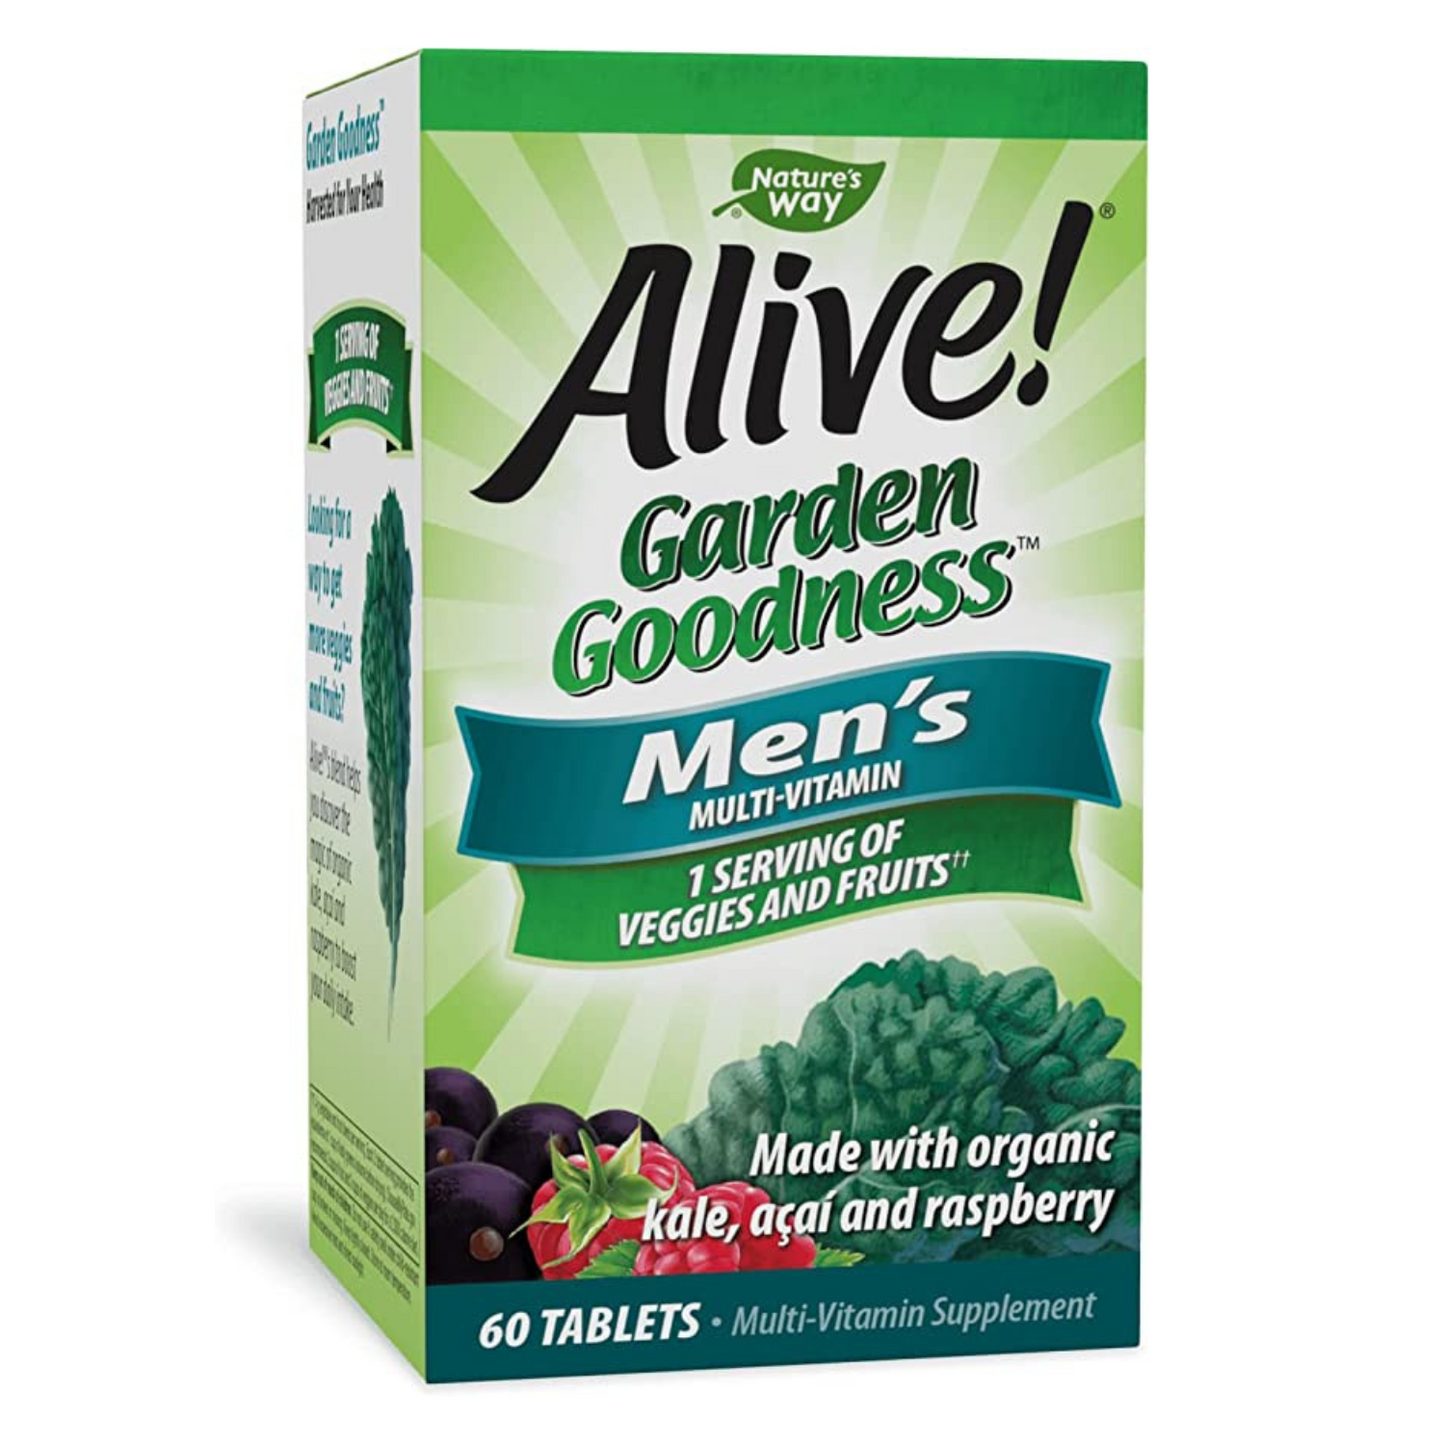 Nature's Way - Alive! Garden Goodness Men's Multivitamin - 60 Tablets